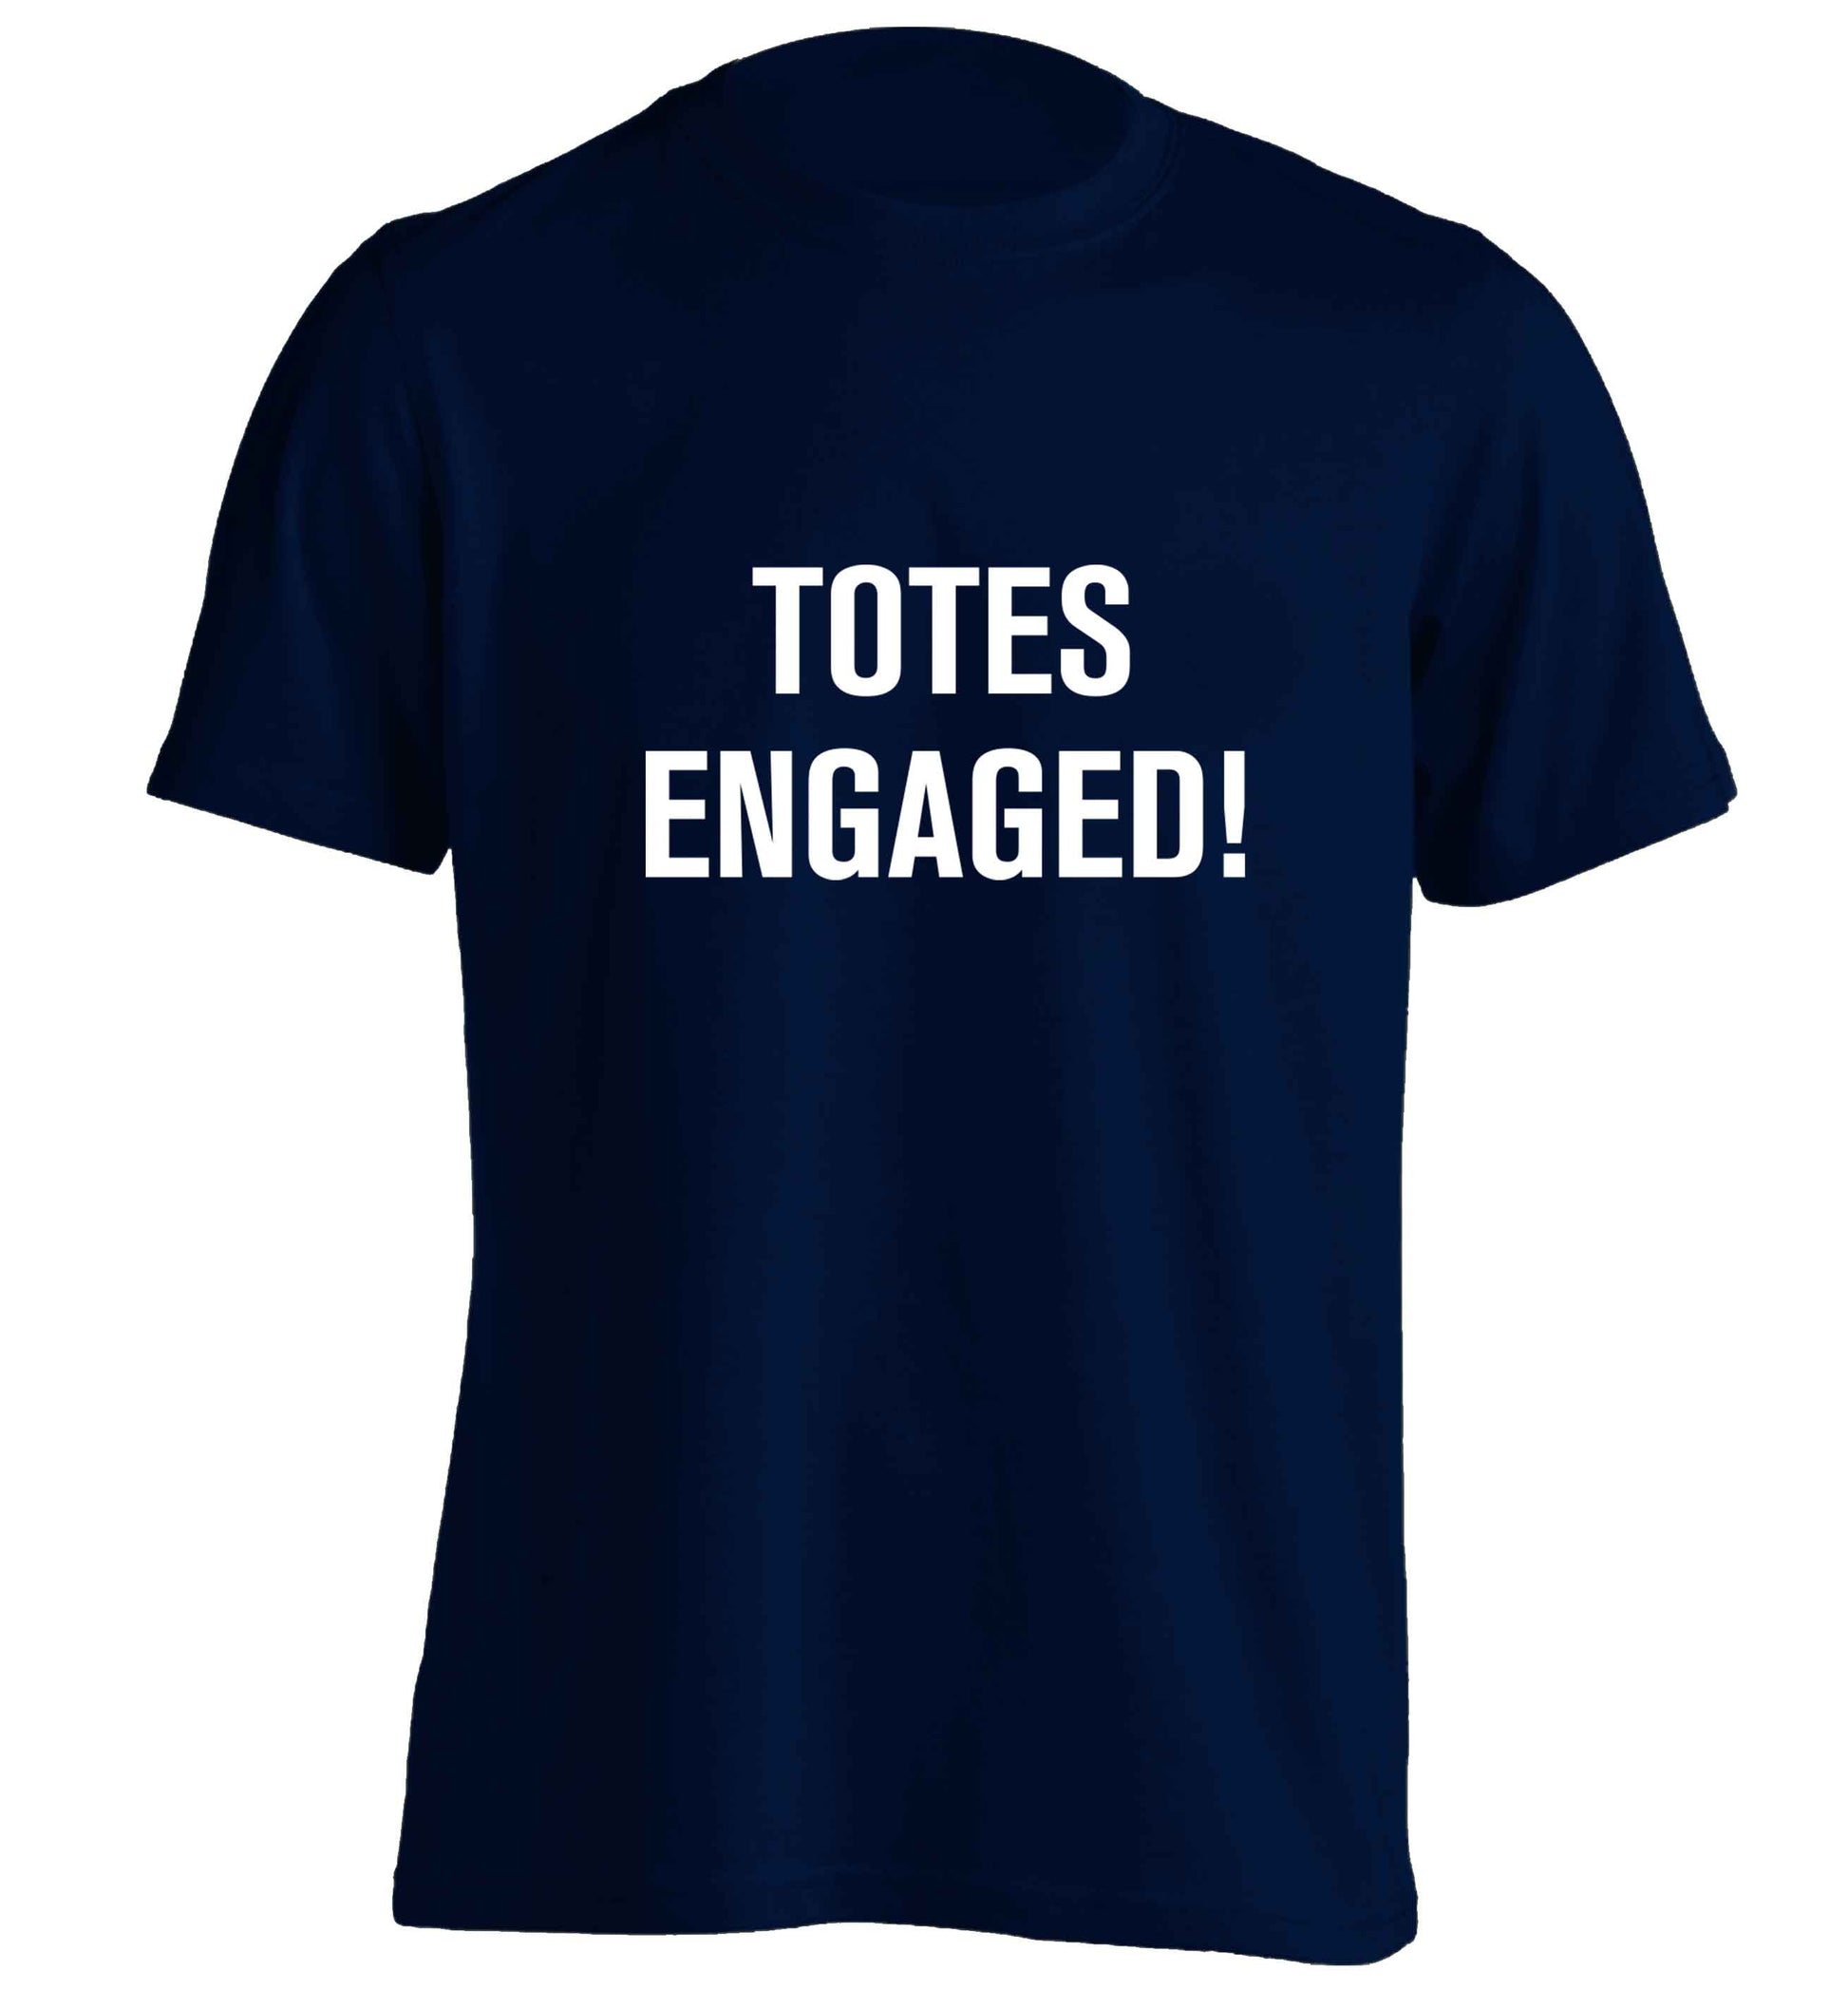 Totes engaged adults unisex navy Tshirt 2XL